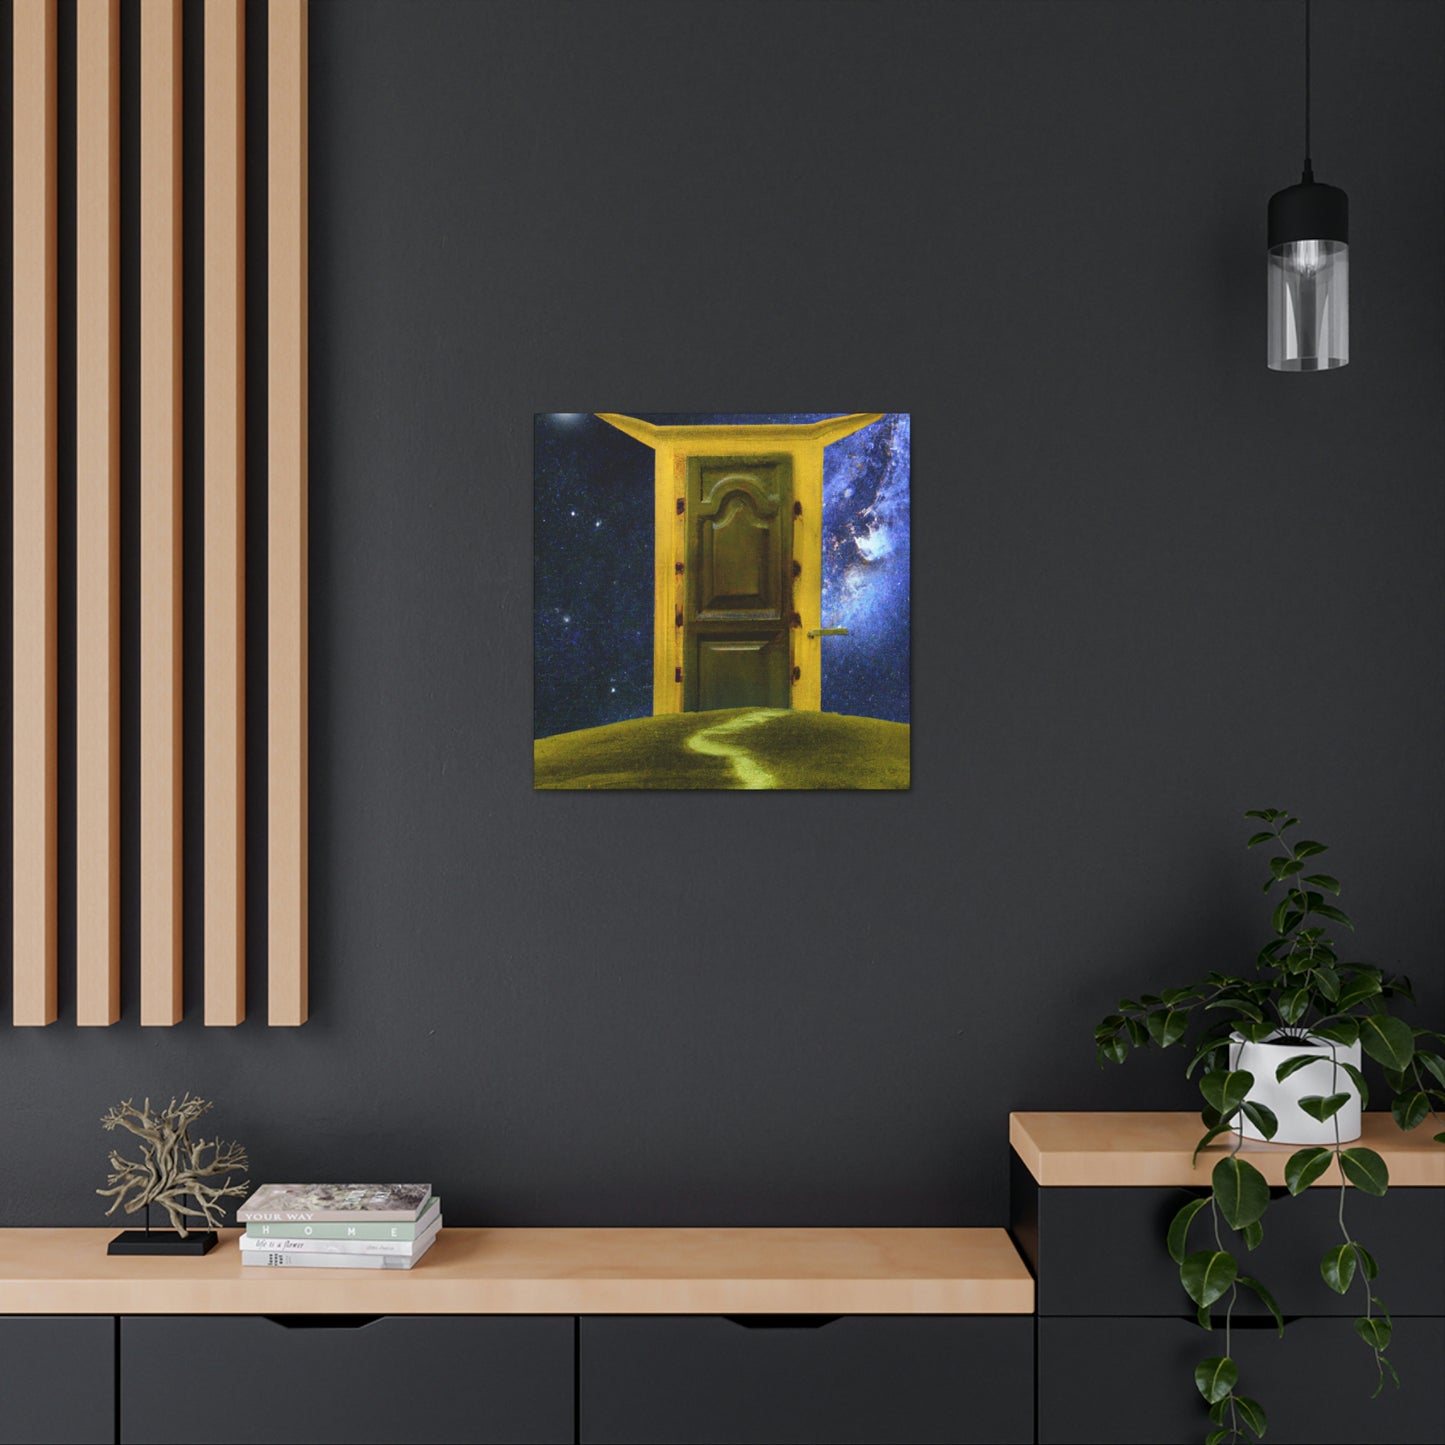 El umbral celestial - El lienzo alienígena